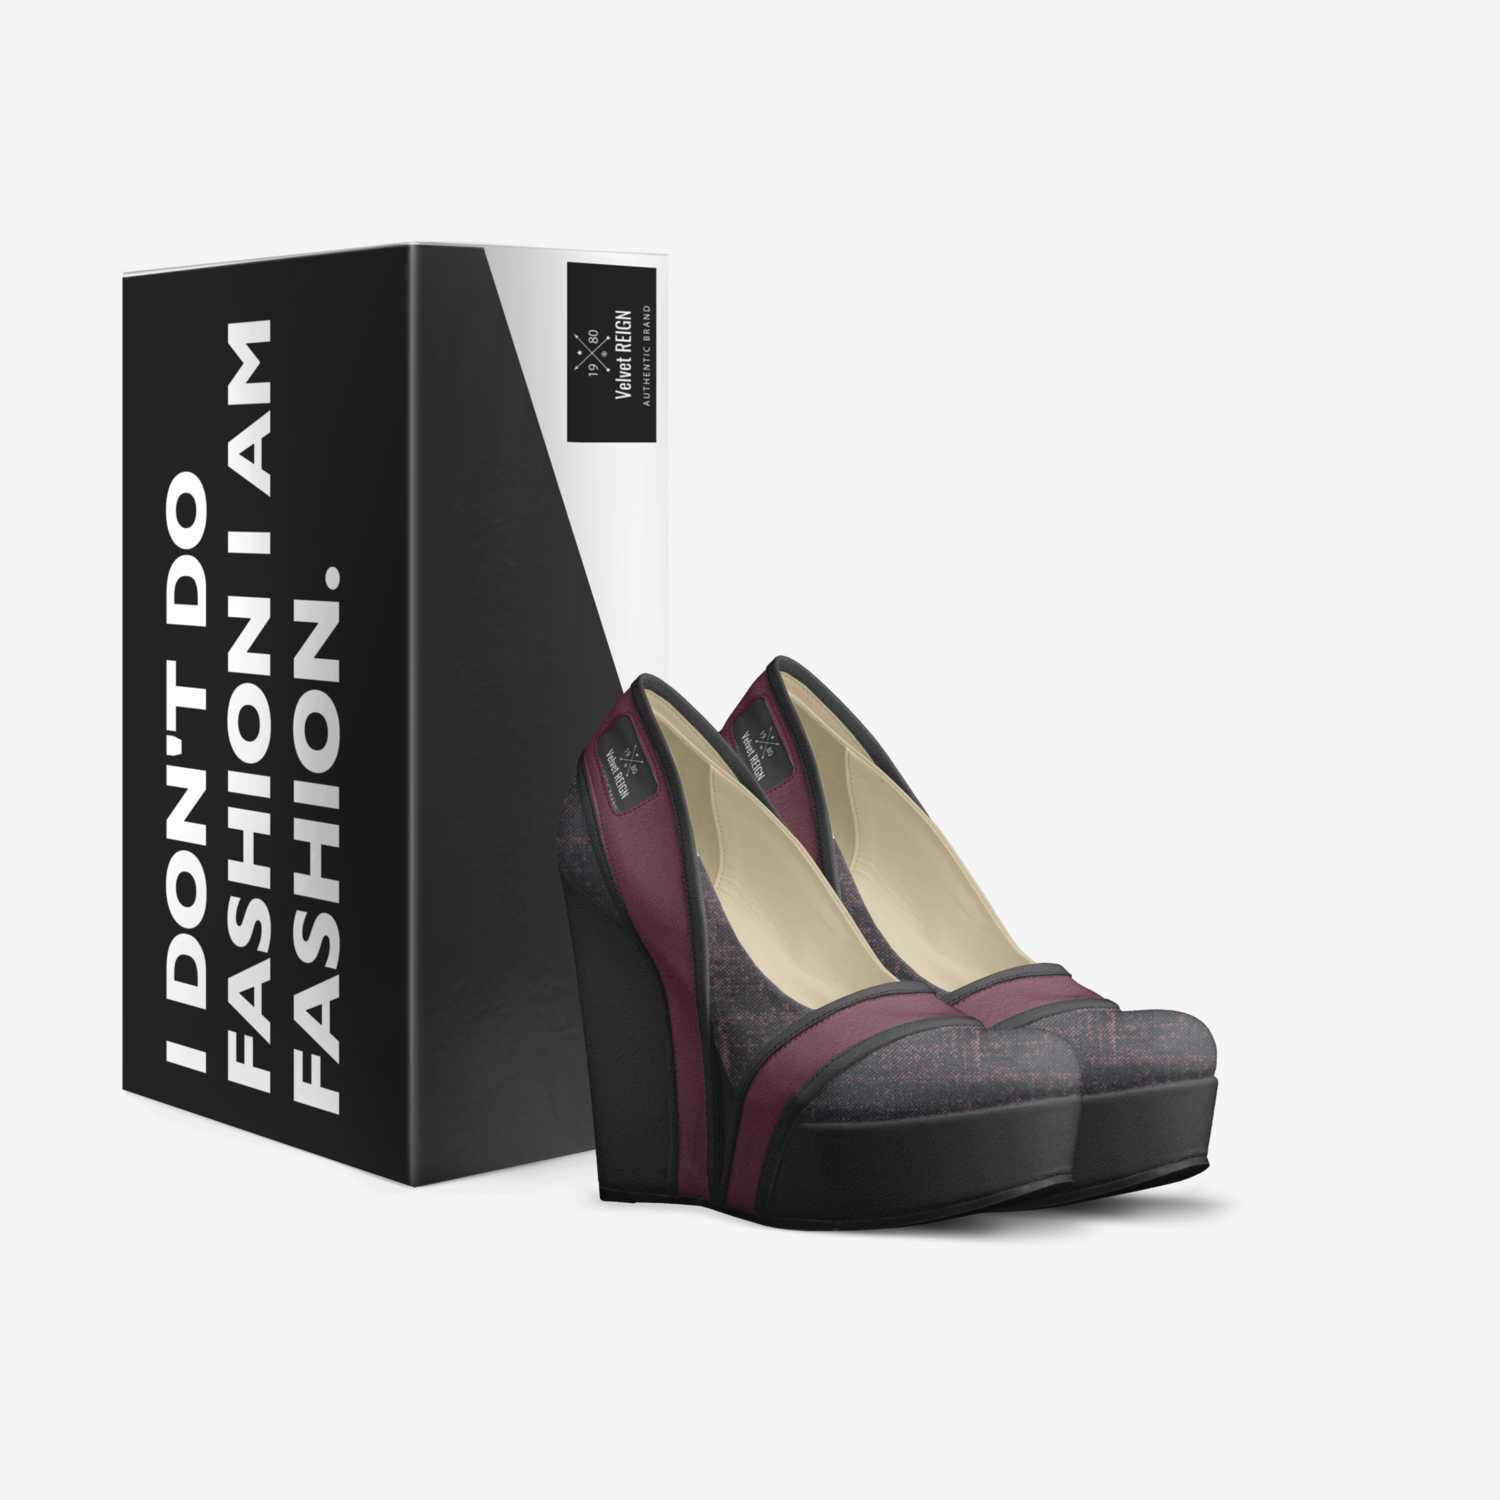 Velvet REIGN custom made in Italy shoes by Shantae Esannason | Box view